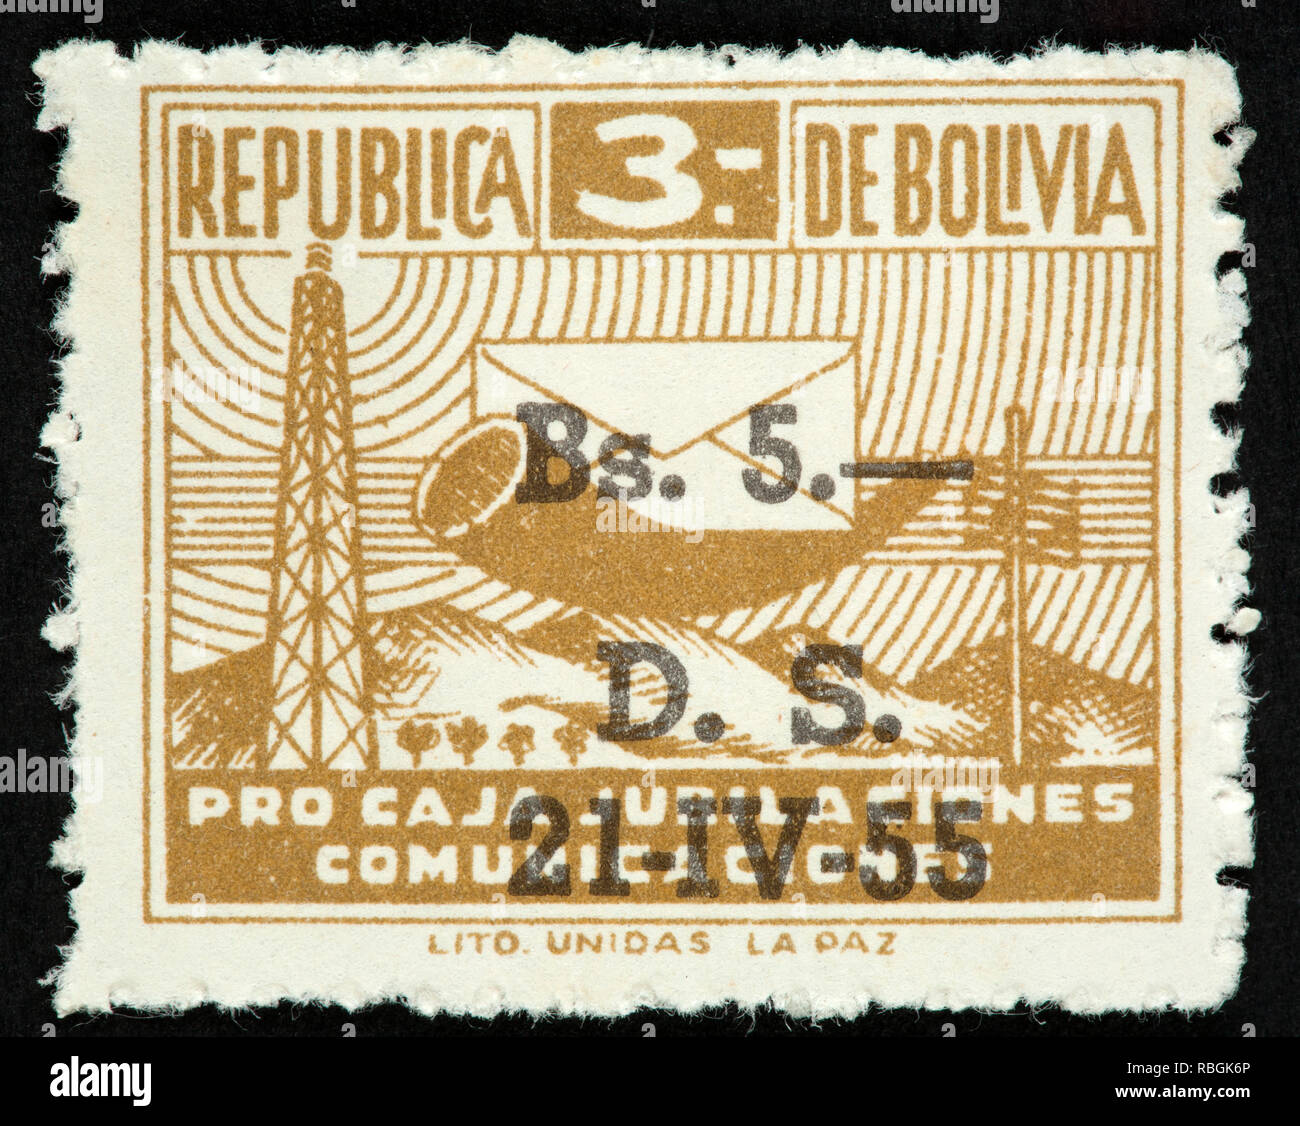 Bolivian postage stamp Stock Photo